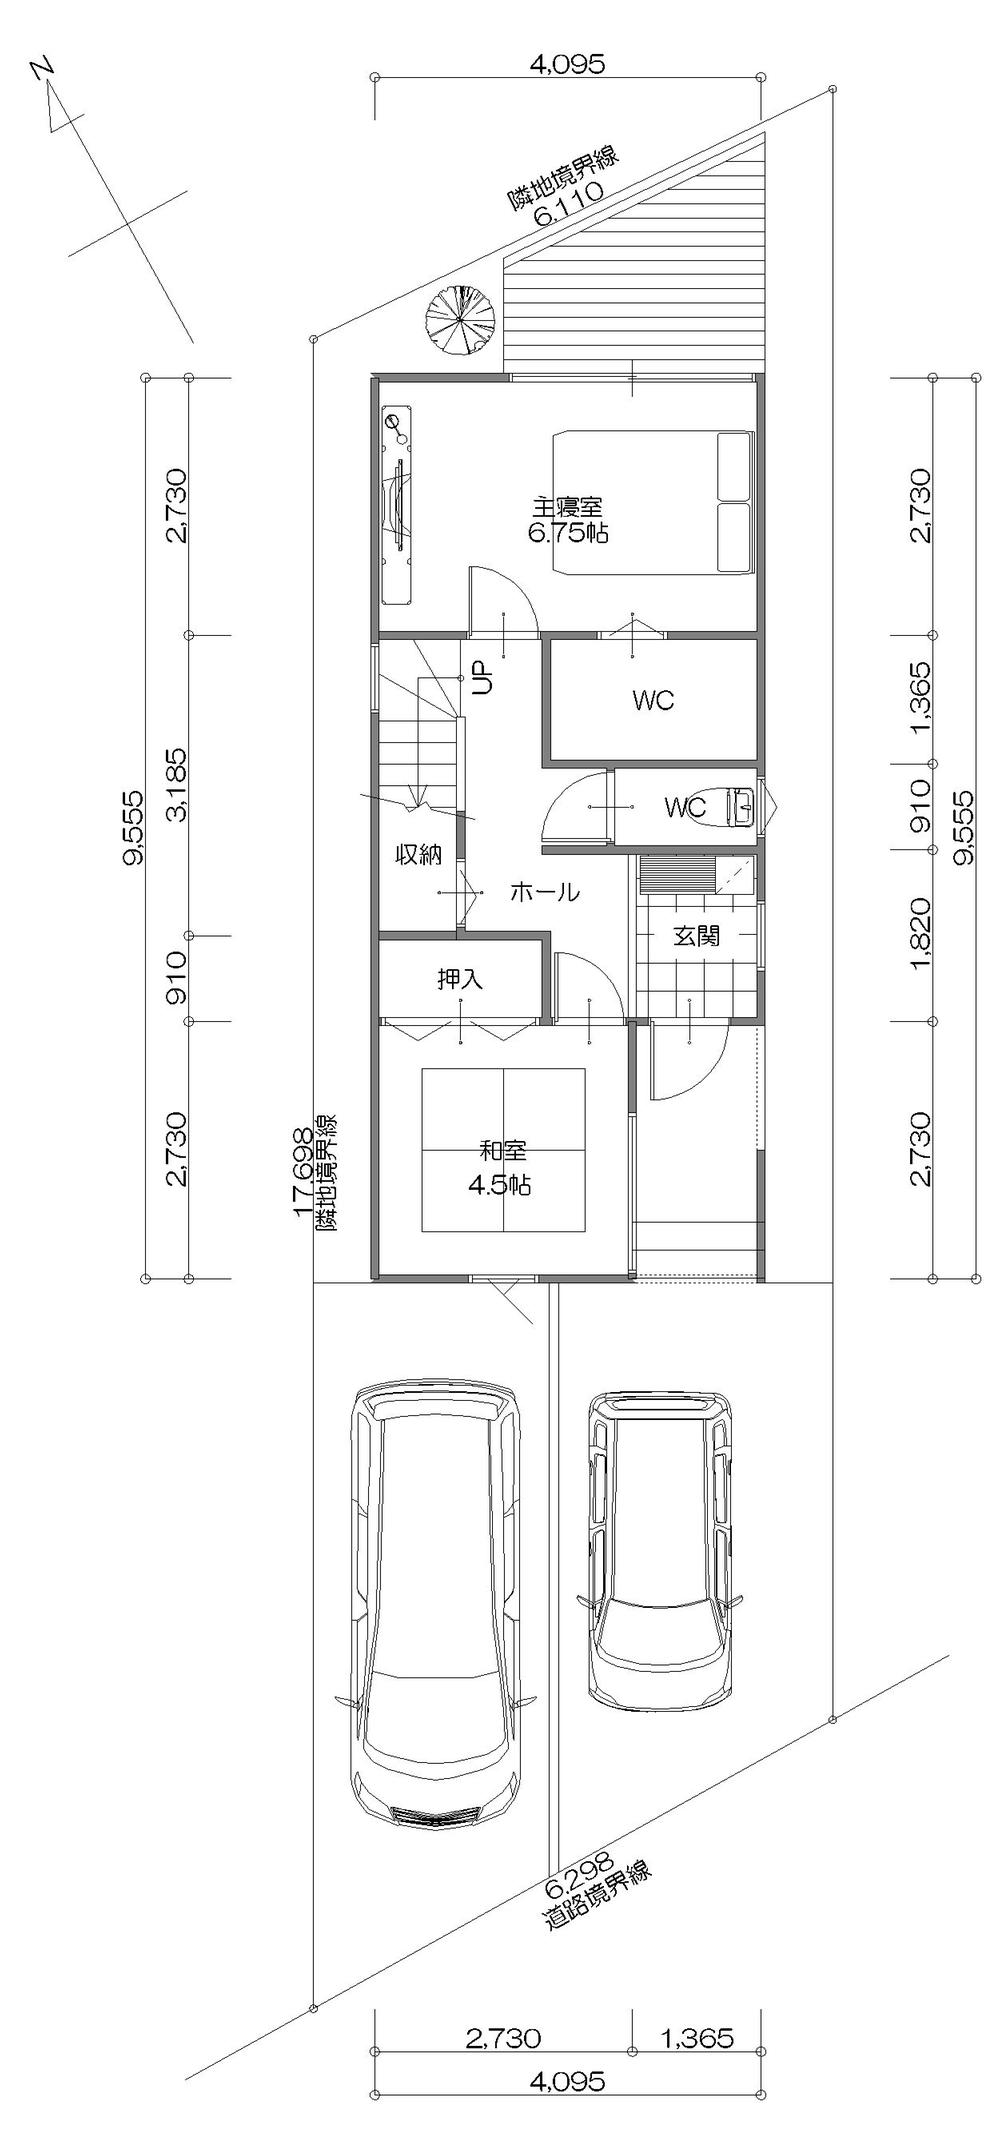 Building plan example (floor plan). 1F plan view 10.68 square meters